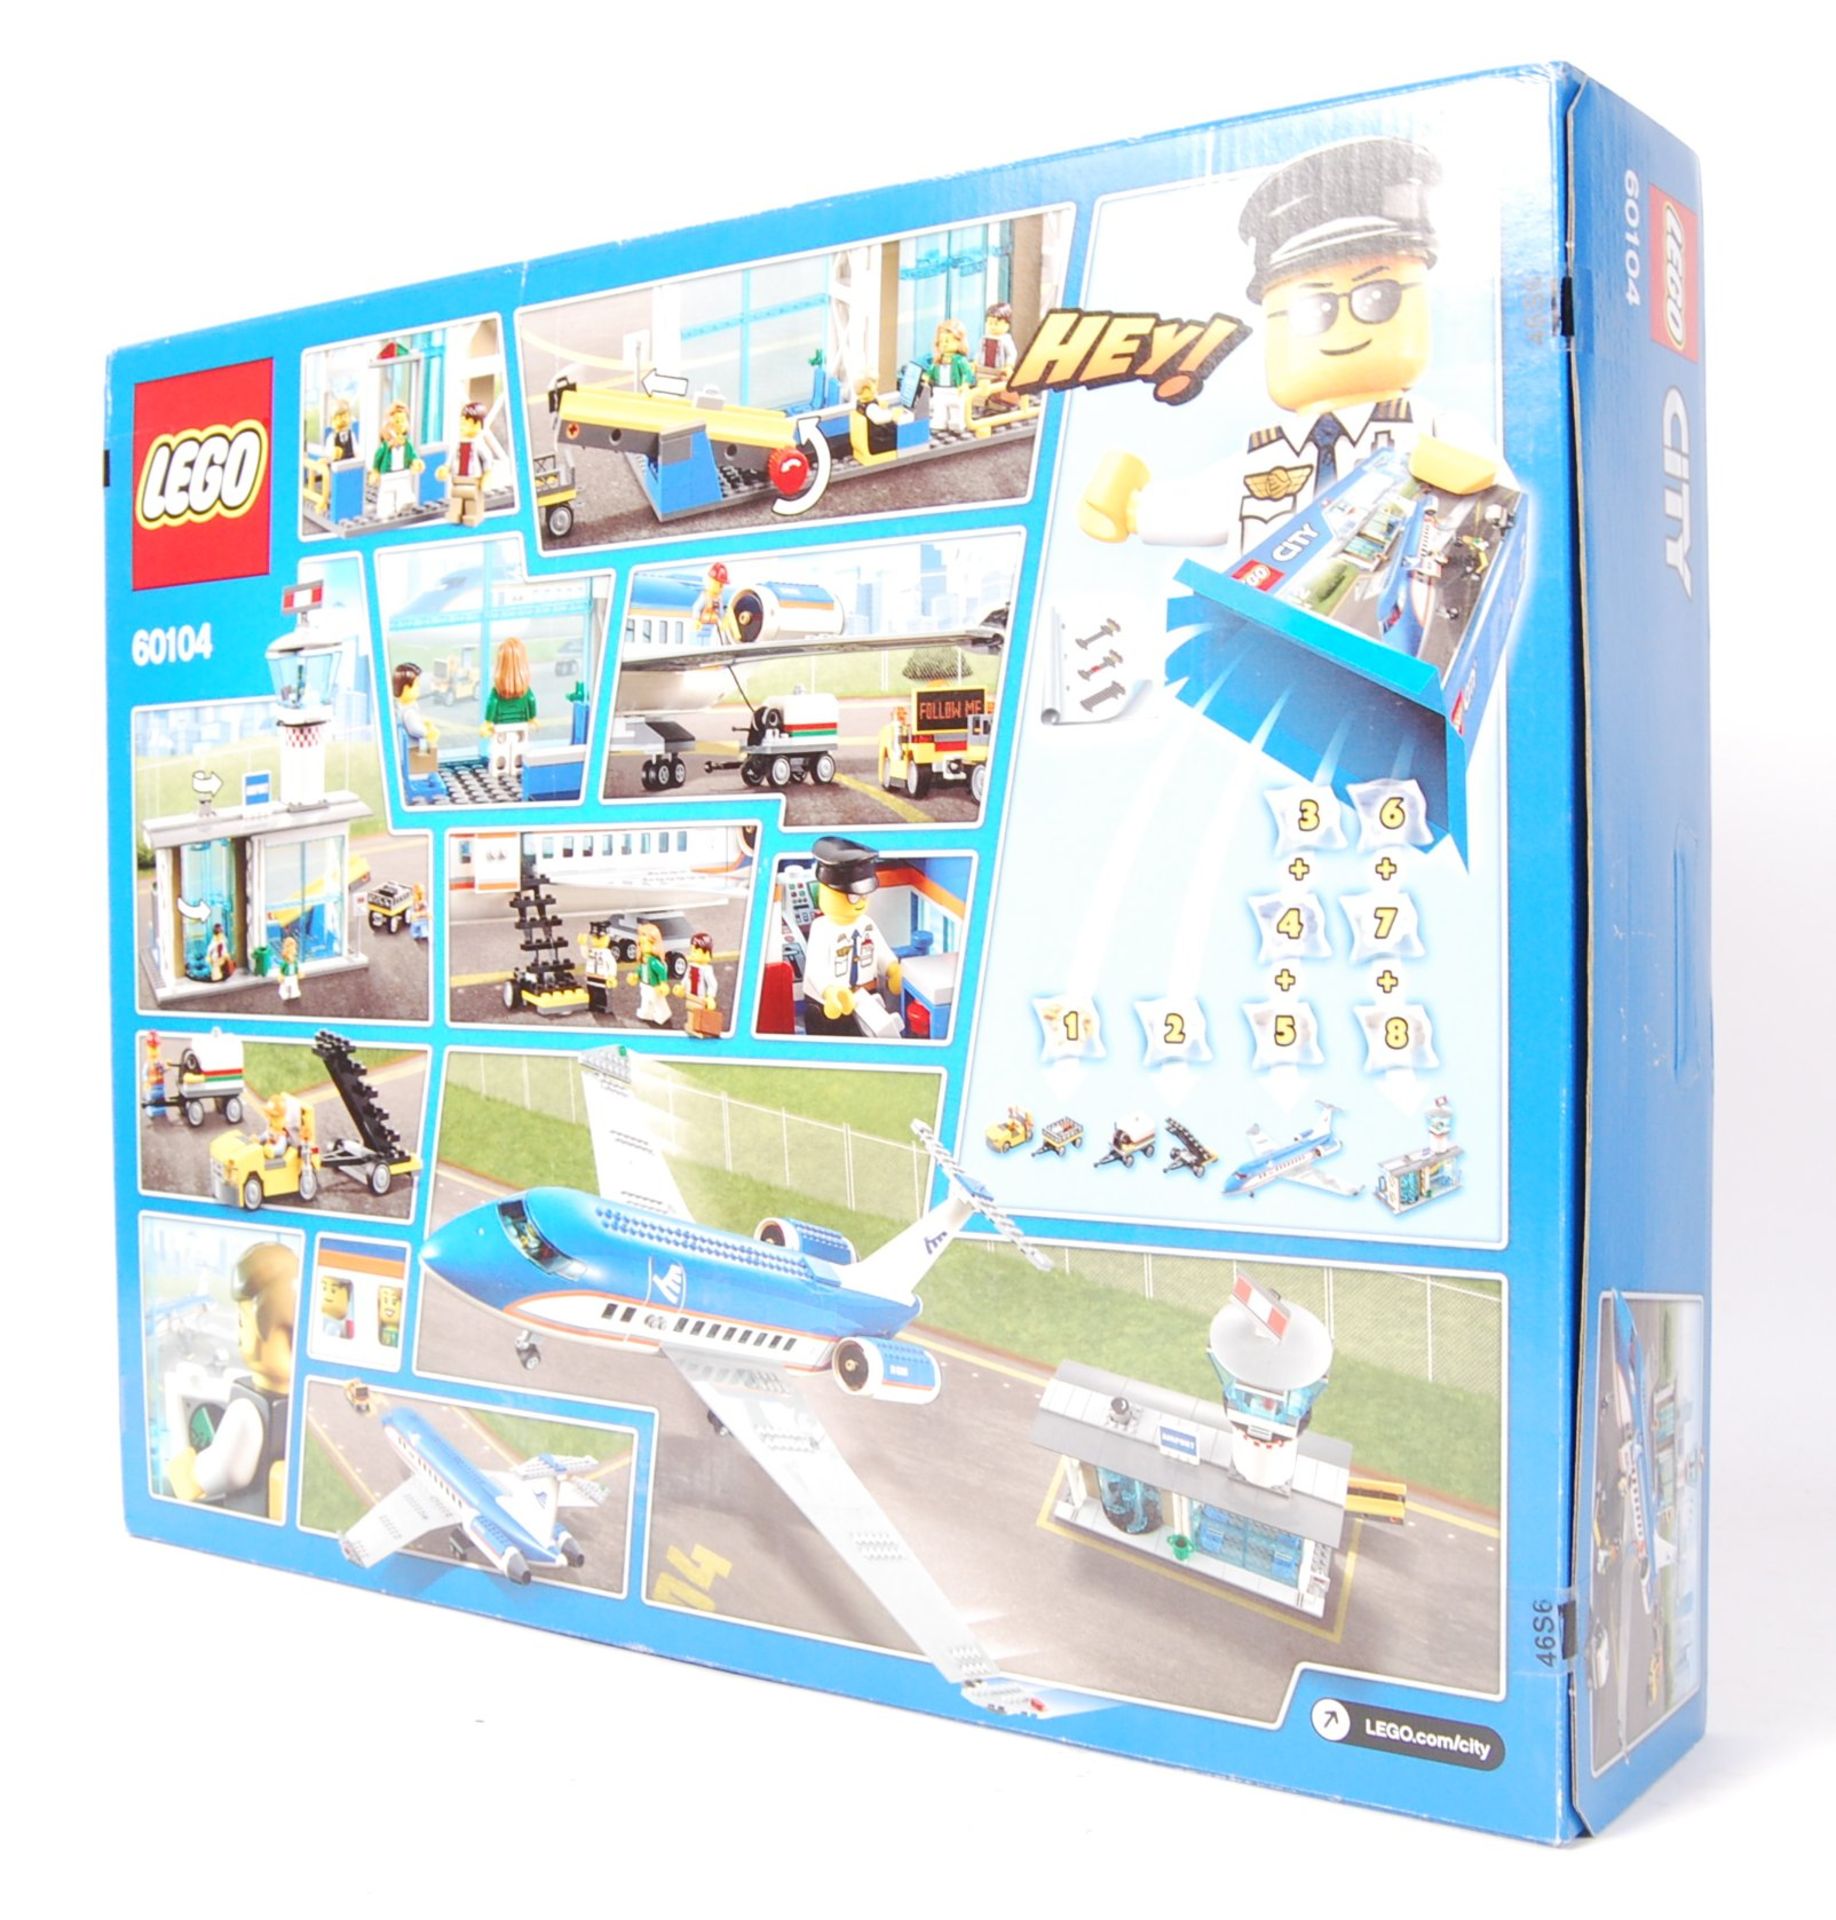 LEGO CITY 60104 ' CITY AIRPORT PASSENGER TERMINAL BUILDING ' - Bild 2 aus 3